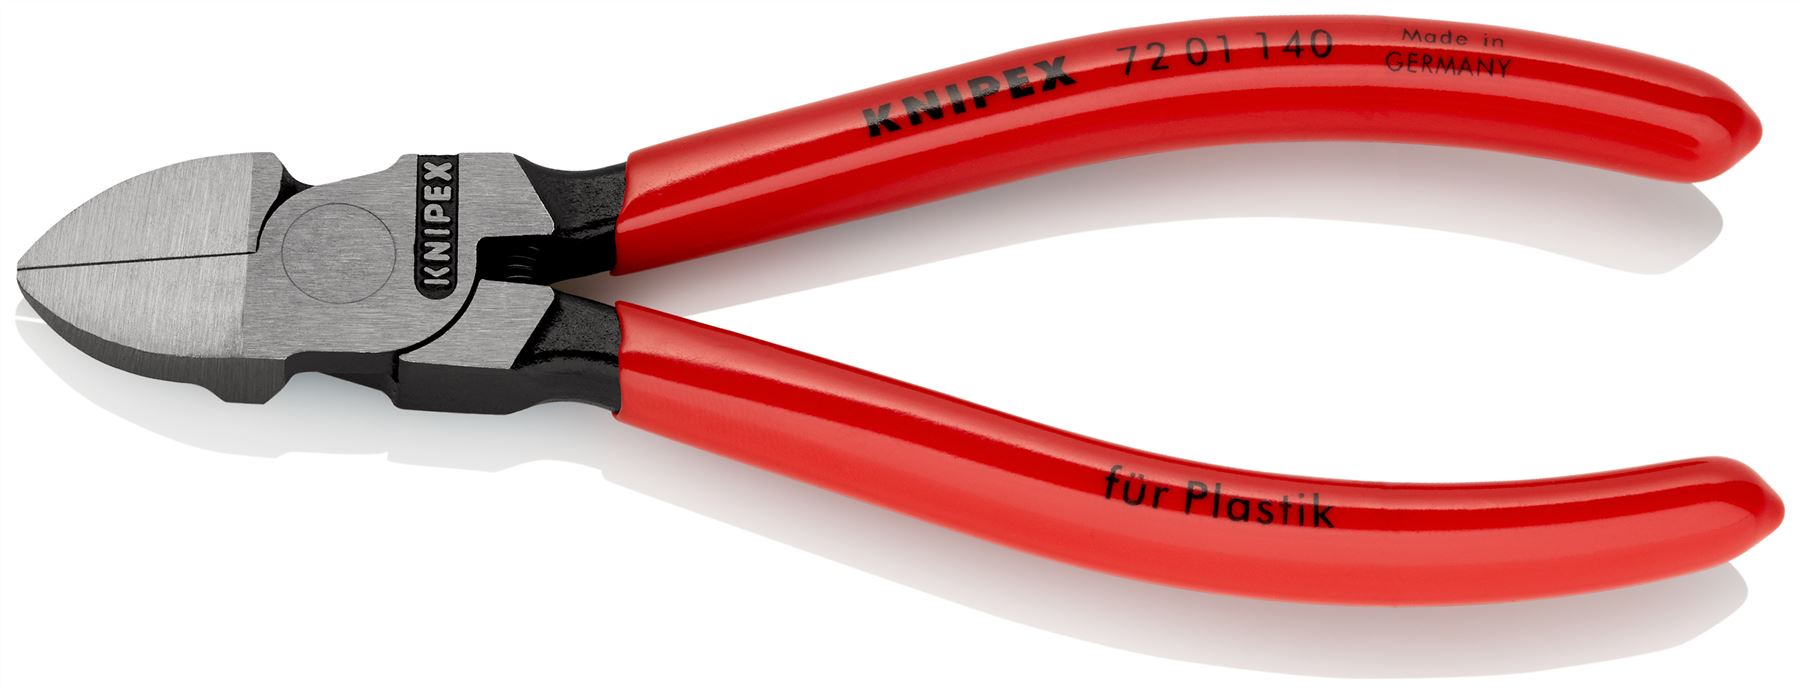 Knipex Cutting Pliers 140mm Diagonal Cutters for Plastics 72 01 140